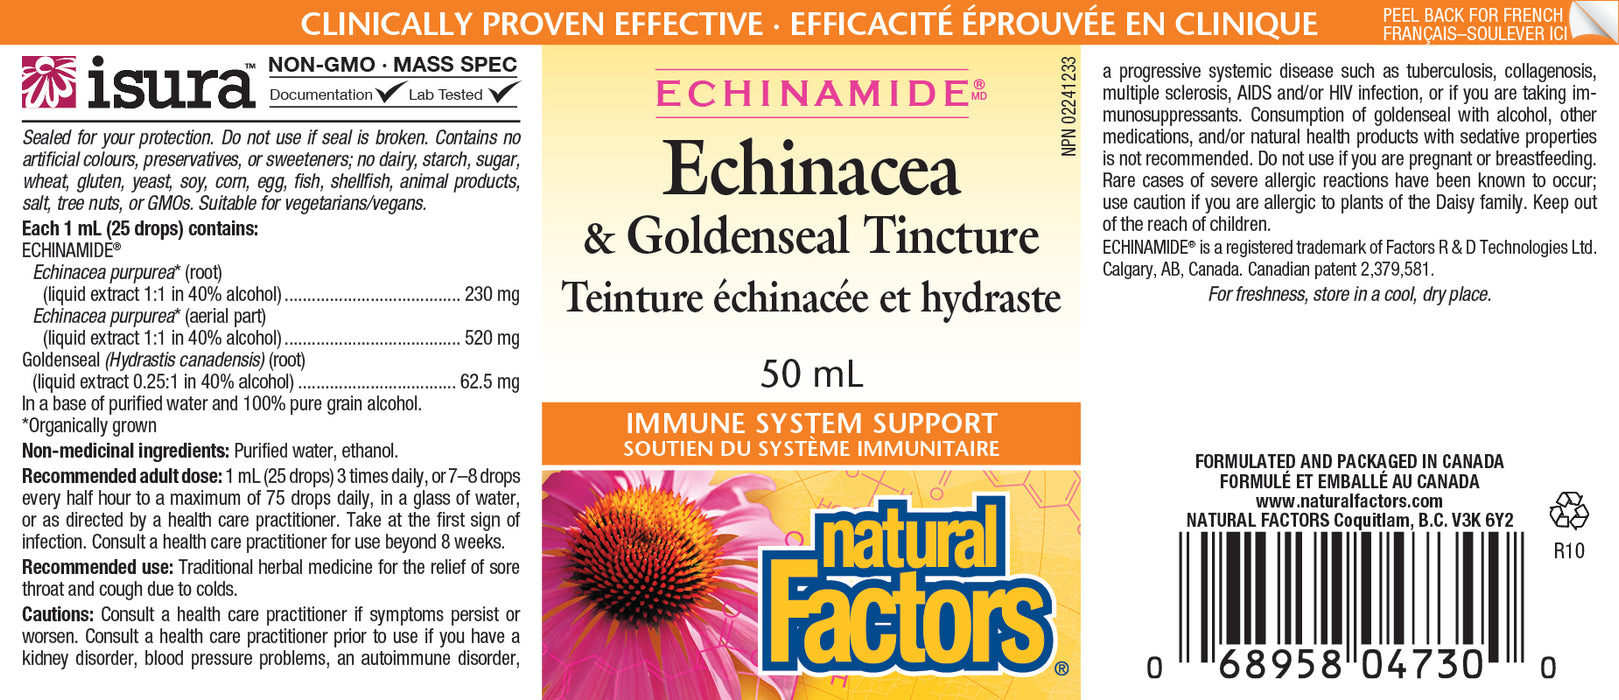 Natural Factors Echinamide Echinacea & Goldenseal Tincture 50mL